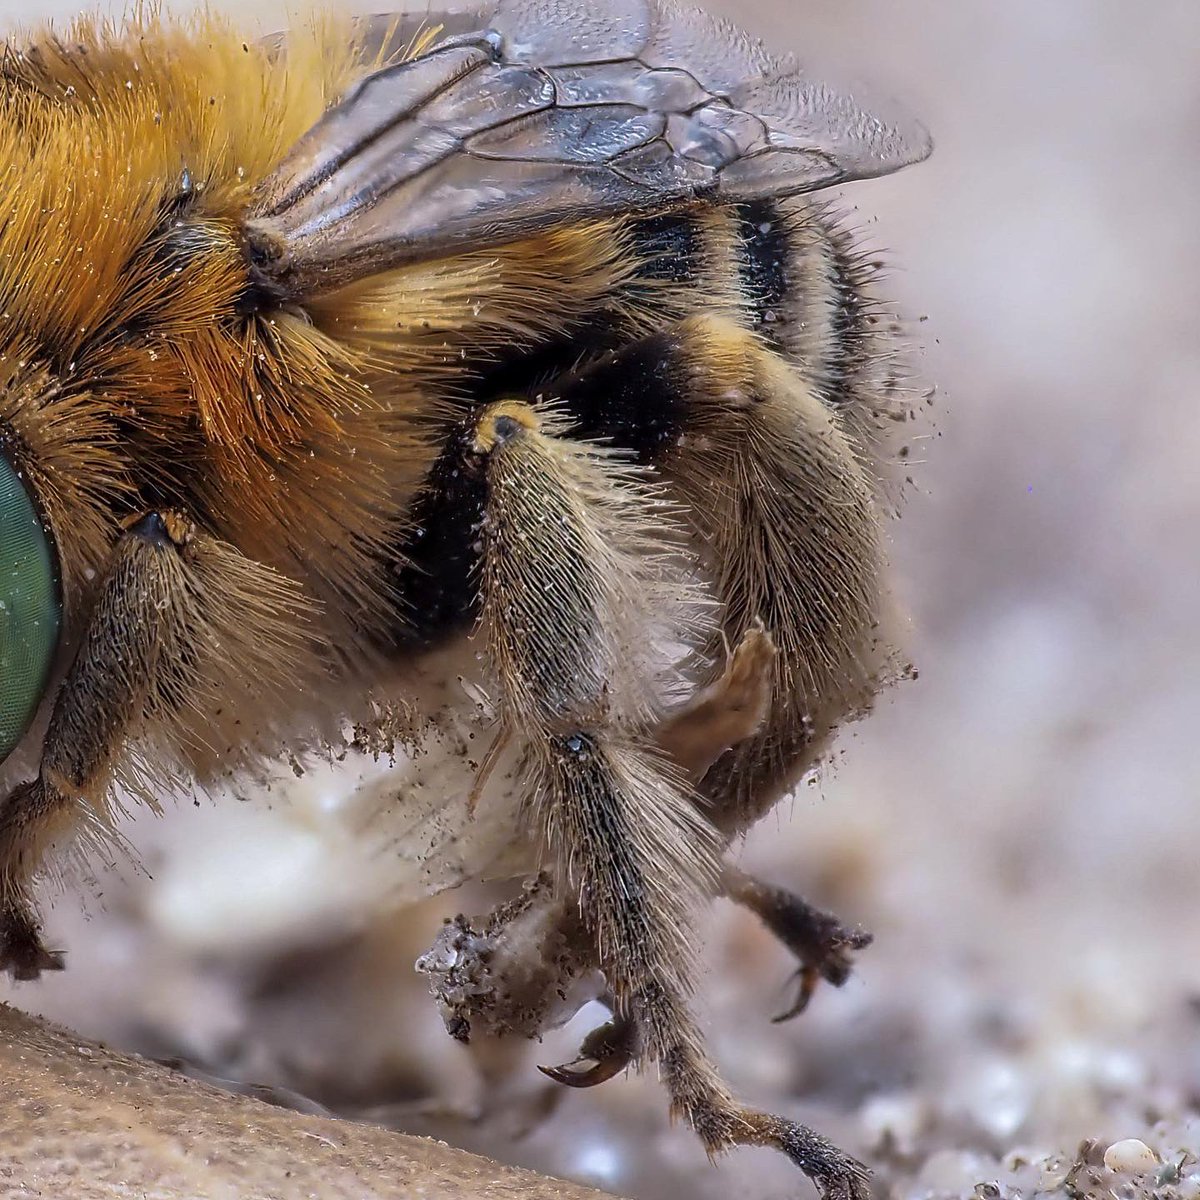 Green-Eyed Flower Bee 🐝 

#Bee #GreenEyedFlowerBee #savethebees #macrophotography #nature #macro #wildlifephotography #wildlife #TwitterNatureCommunity 
.
.
.

@Natures_Voice @OMSYSTEMcameras @WildlifeMag @BBCEarth @NatGeoUK @BBCCountryfile @BBCSpringwatch @NatureIn_Focus